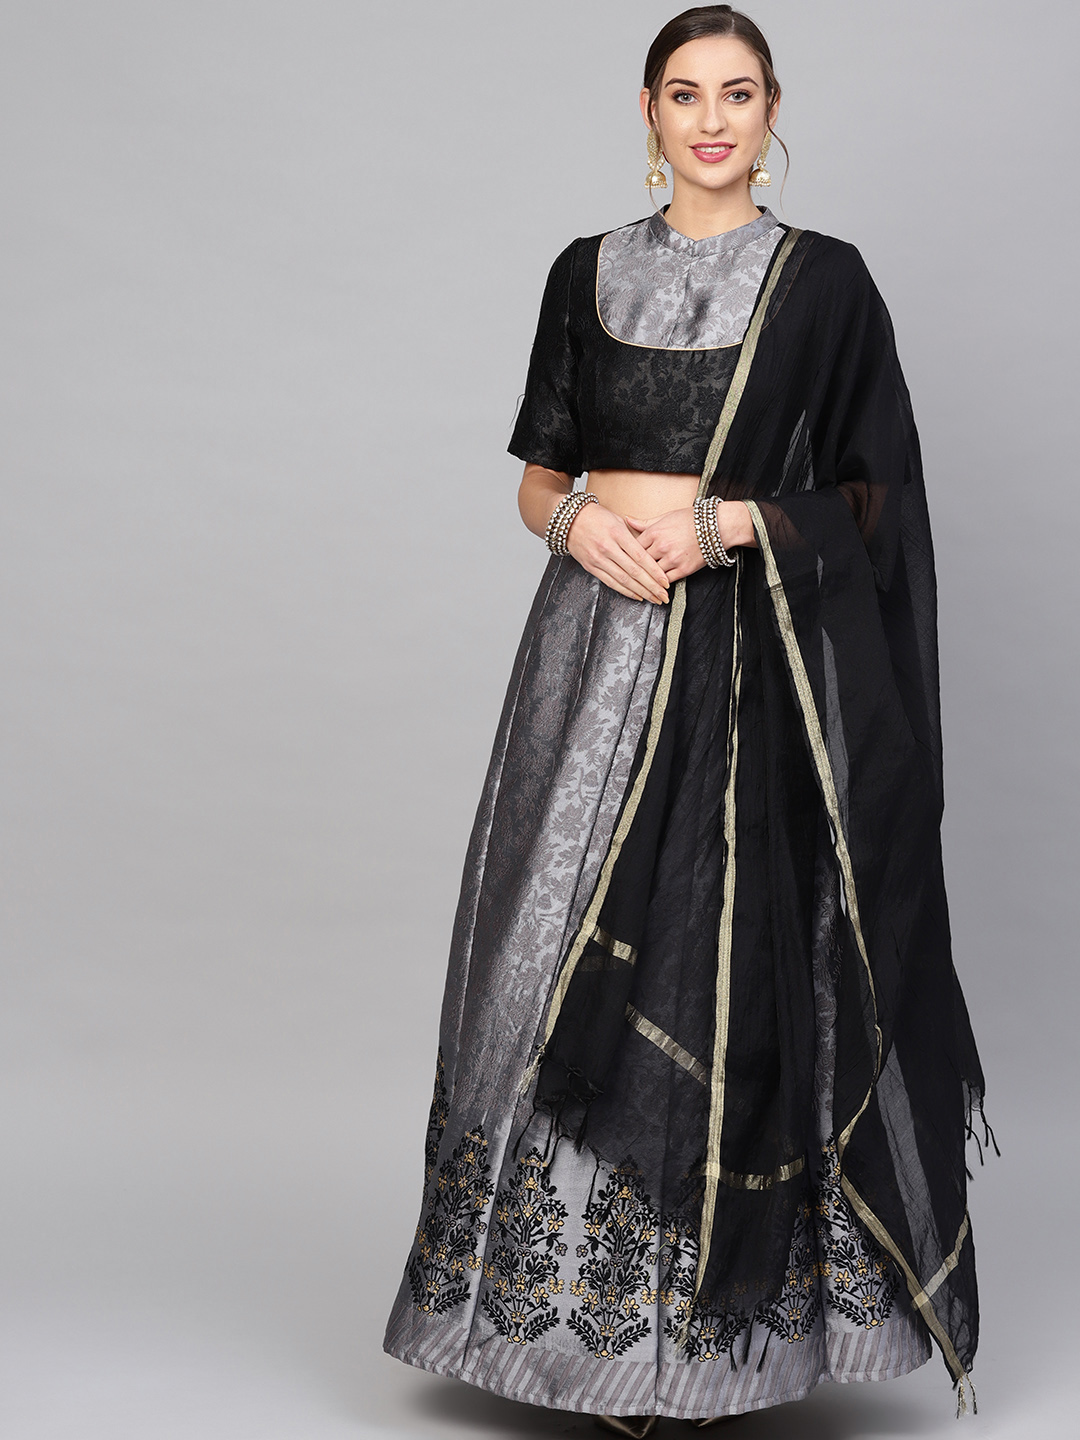 AKS Charcoal Grey & Black Woven Design Ready to Wear Jacquard Lehenga Choli with Dupatta Price in India